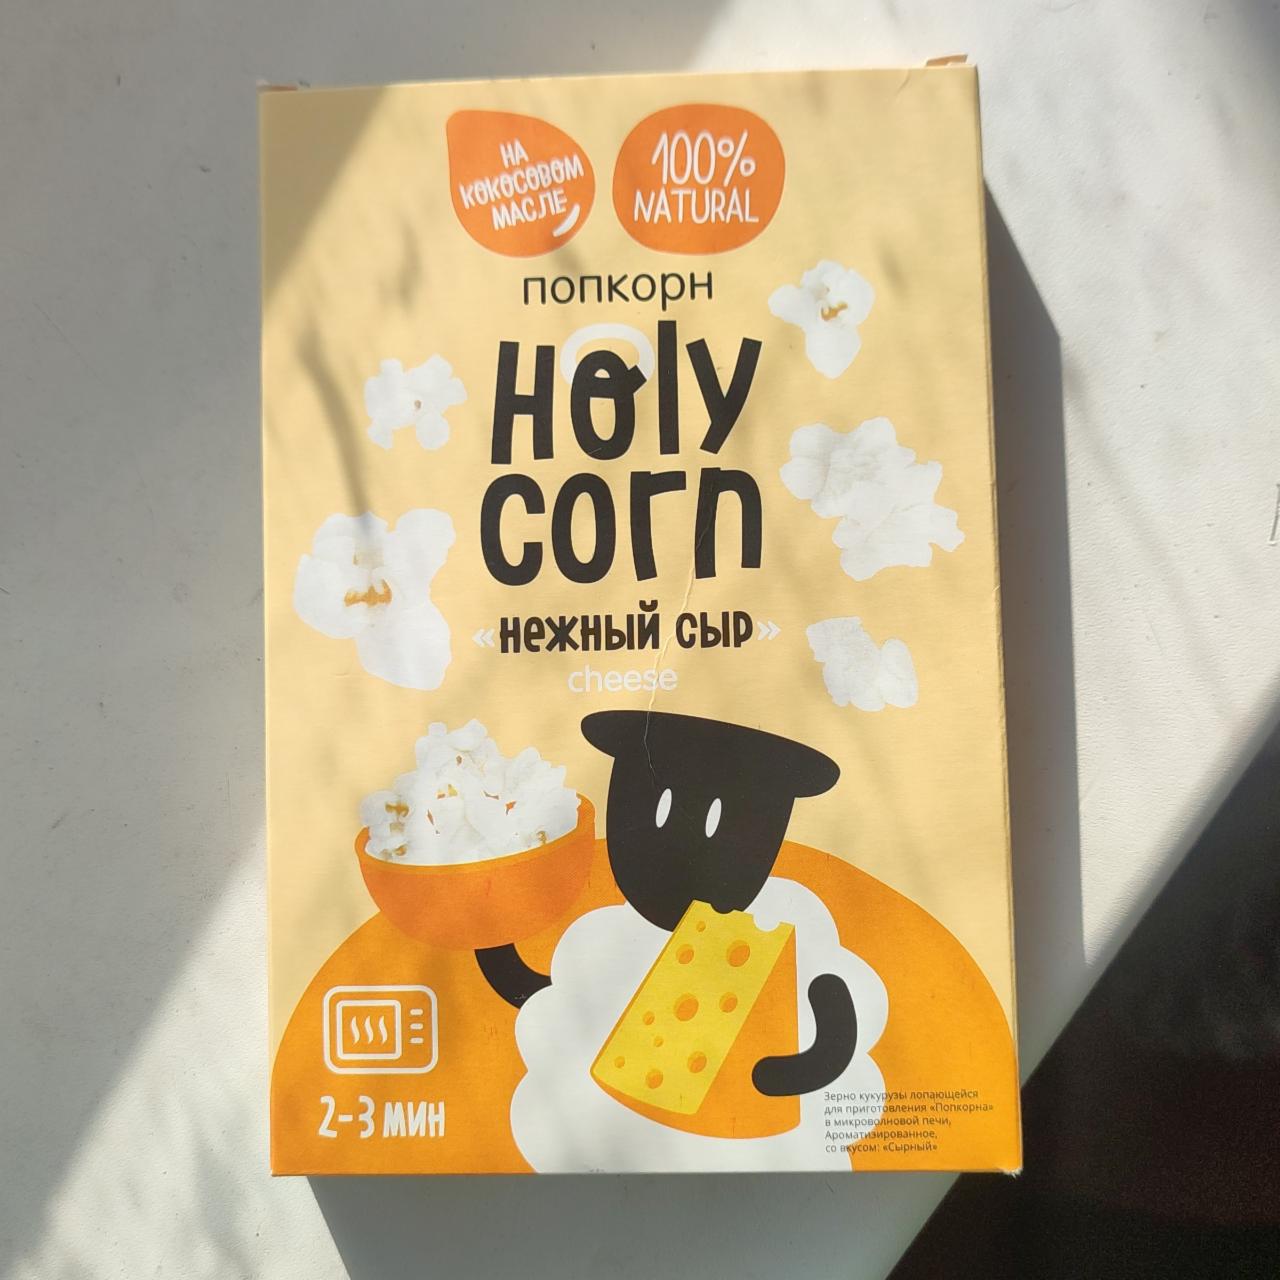 Фото - Попкорн нежный сыр Holy Corn